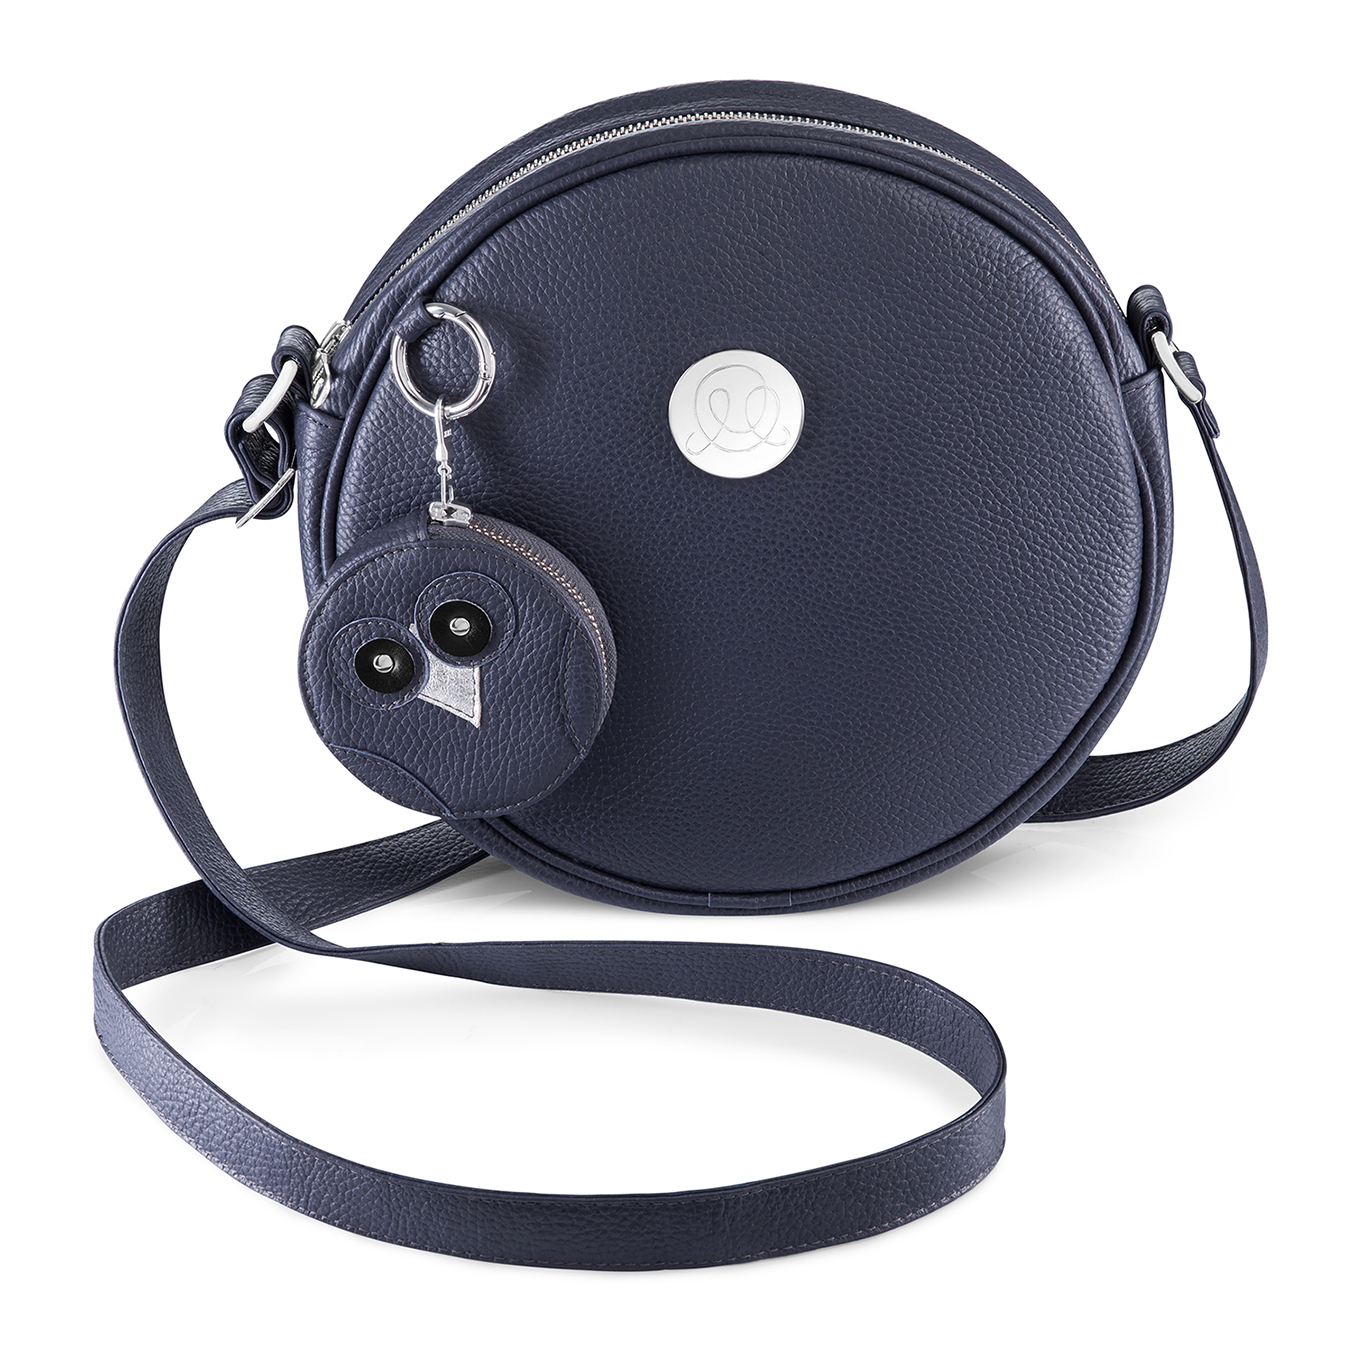 IDA bag with purse - navy